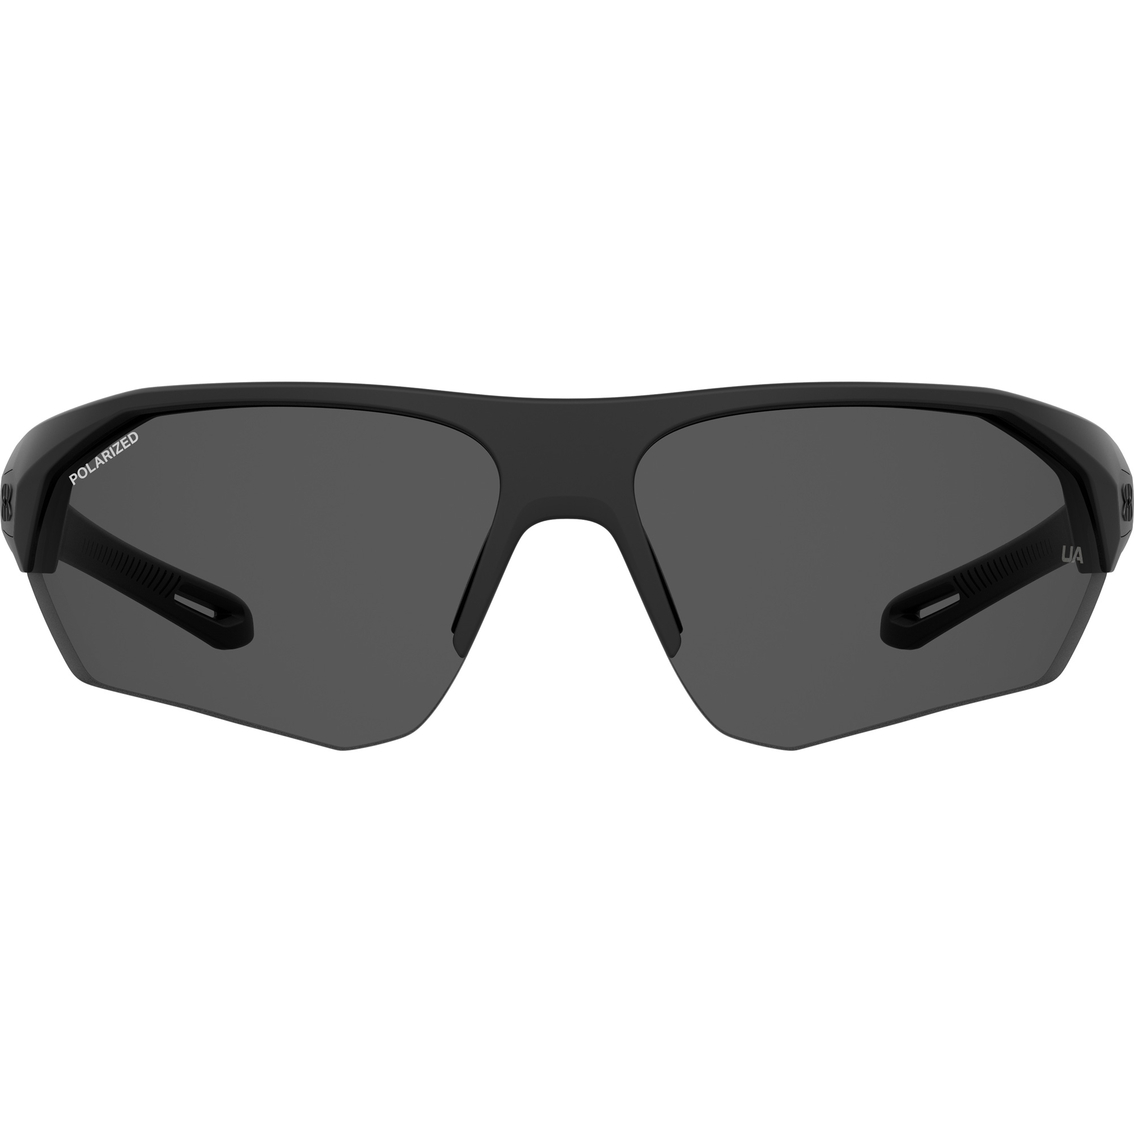 Under Armour Semi Rimmed Plastic Frame Shield Shape Sunglasses UA0001GS - Image 2 of 4